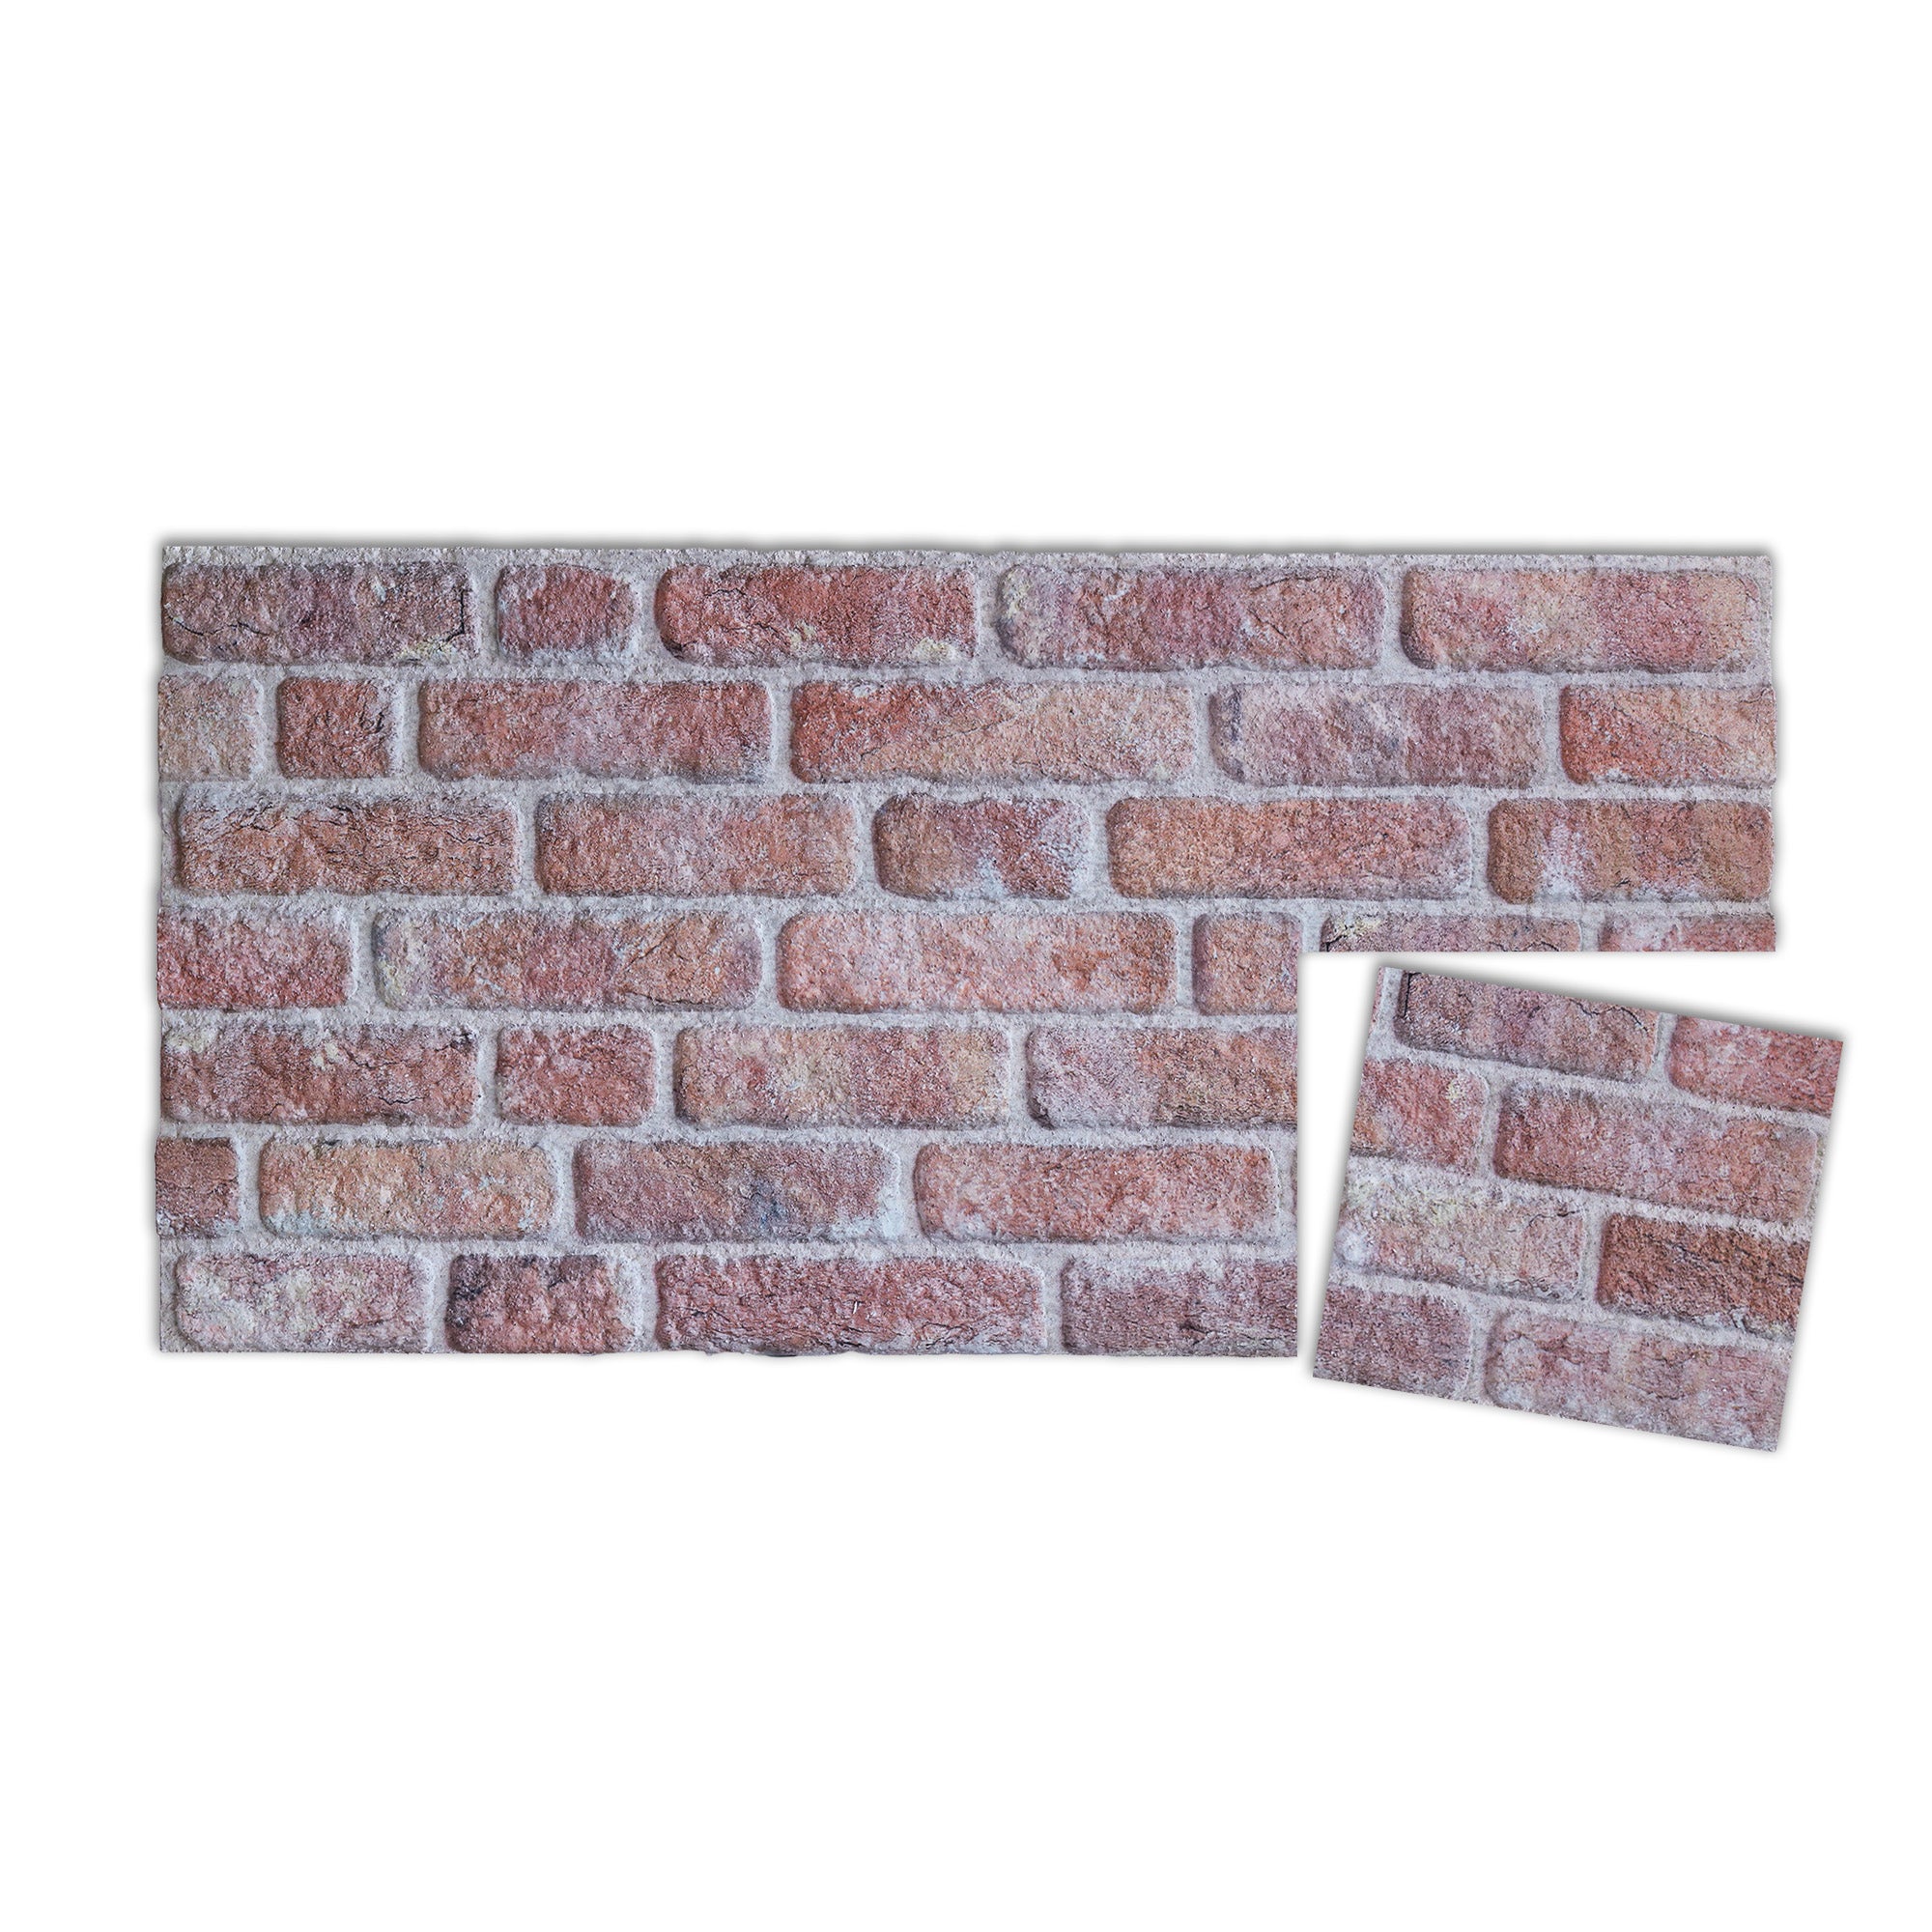 Sample Product 25x25 cm Stone Bridge L-1902 Brick Wall Panels